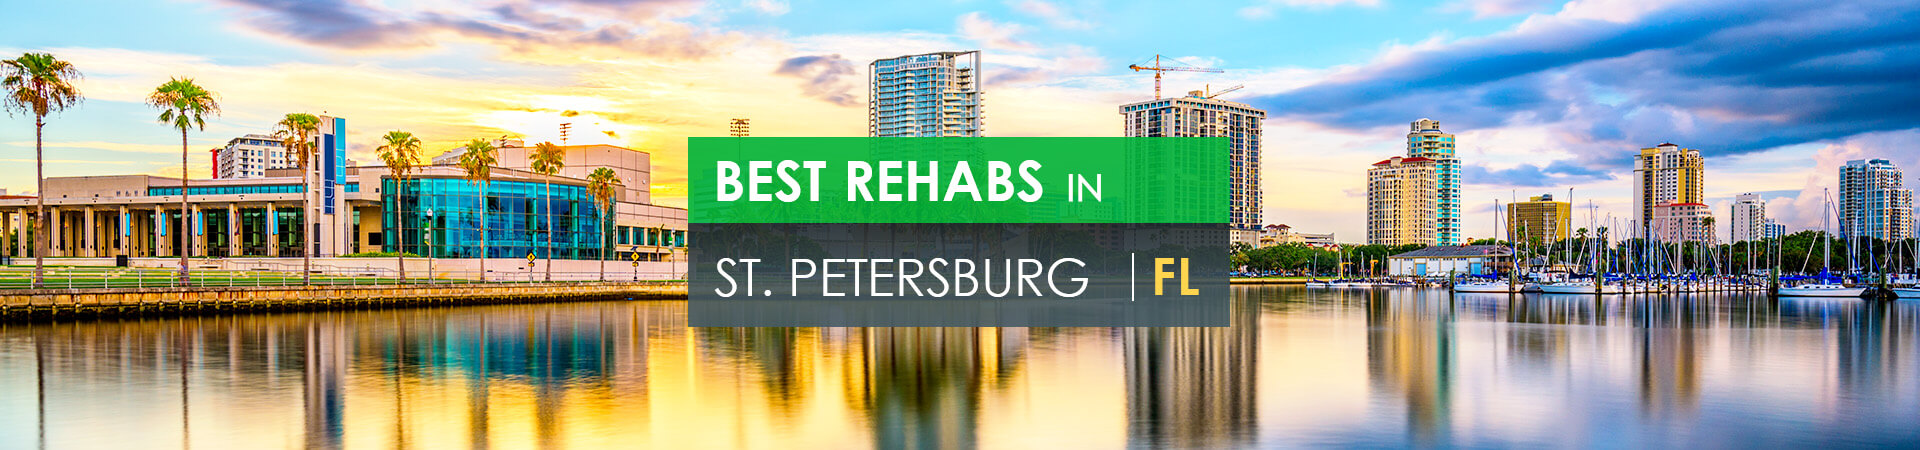 Best rehabs in St. Petersburg, FL